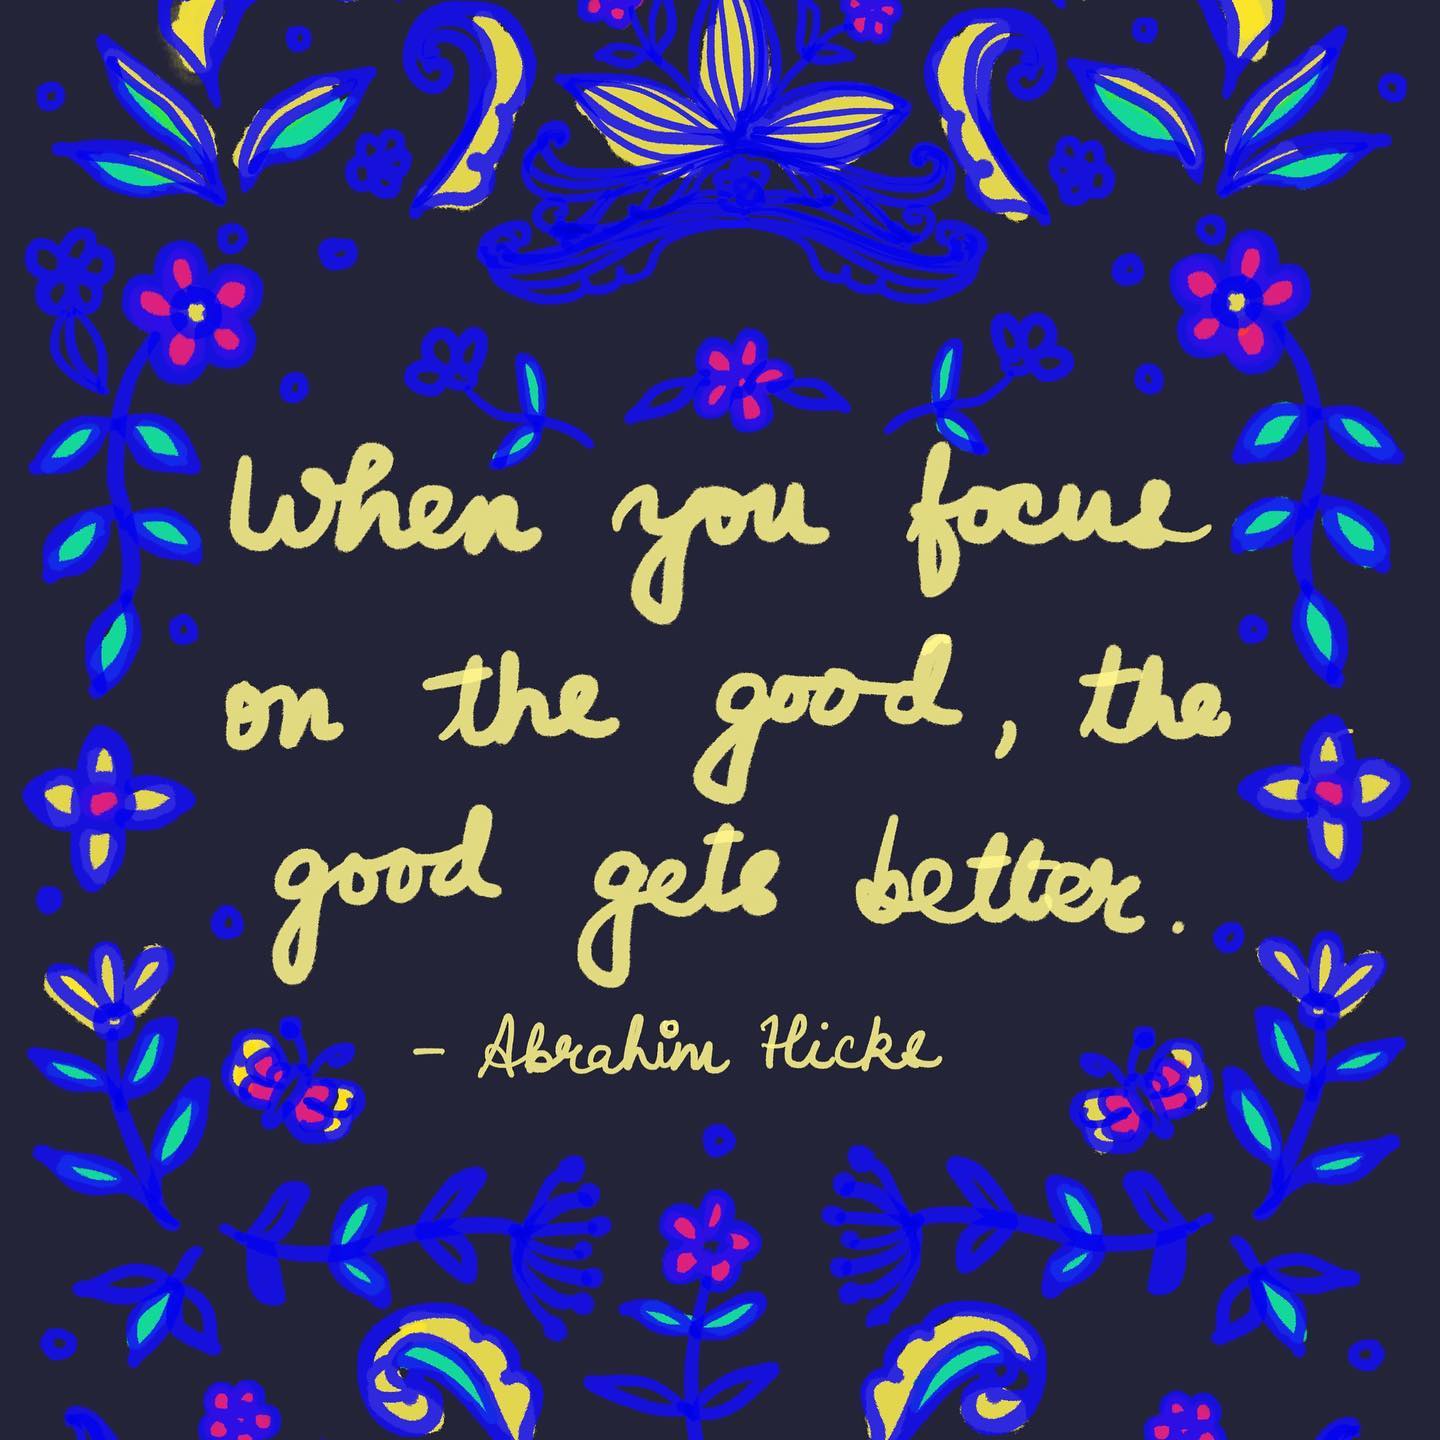 Focus on the good!